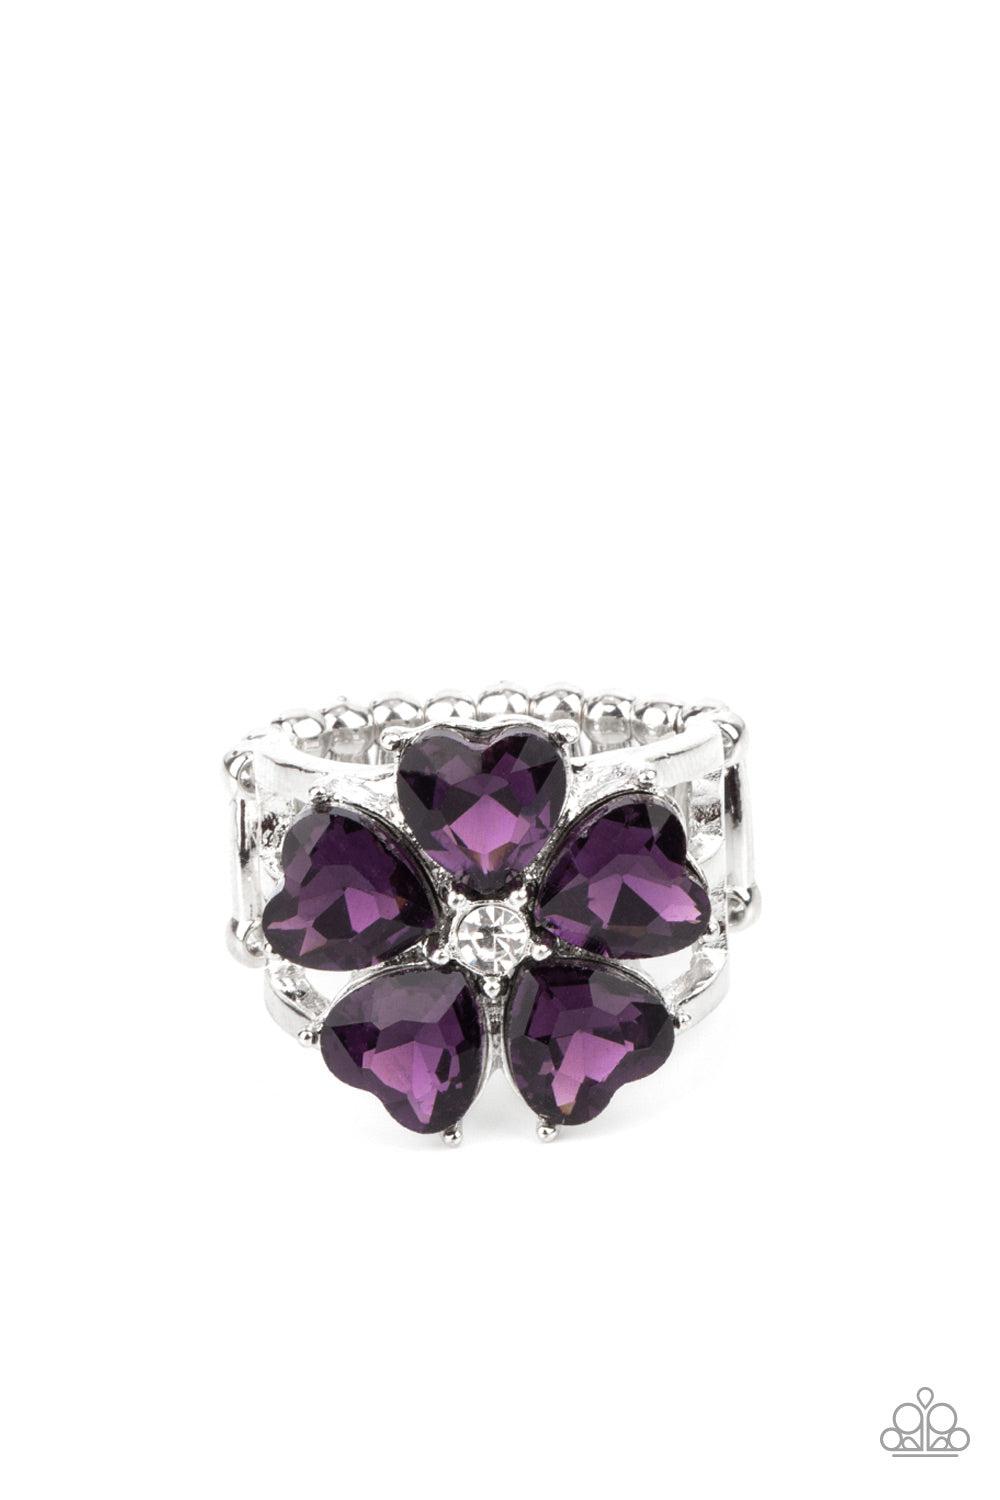 Minnesota Magic Purple Flower Ring - Paparazzi Accessories- lightbox - CarasShop.com - $5 Jewelry by Cara Jewels